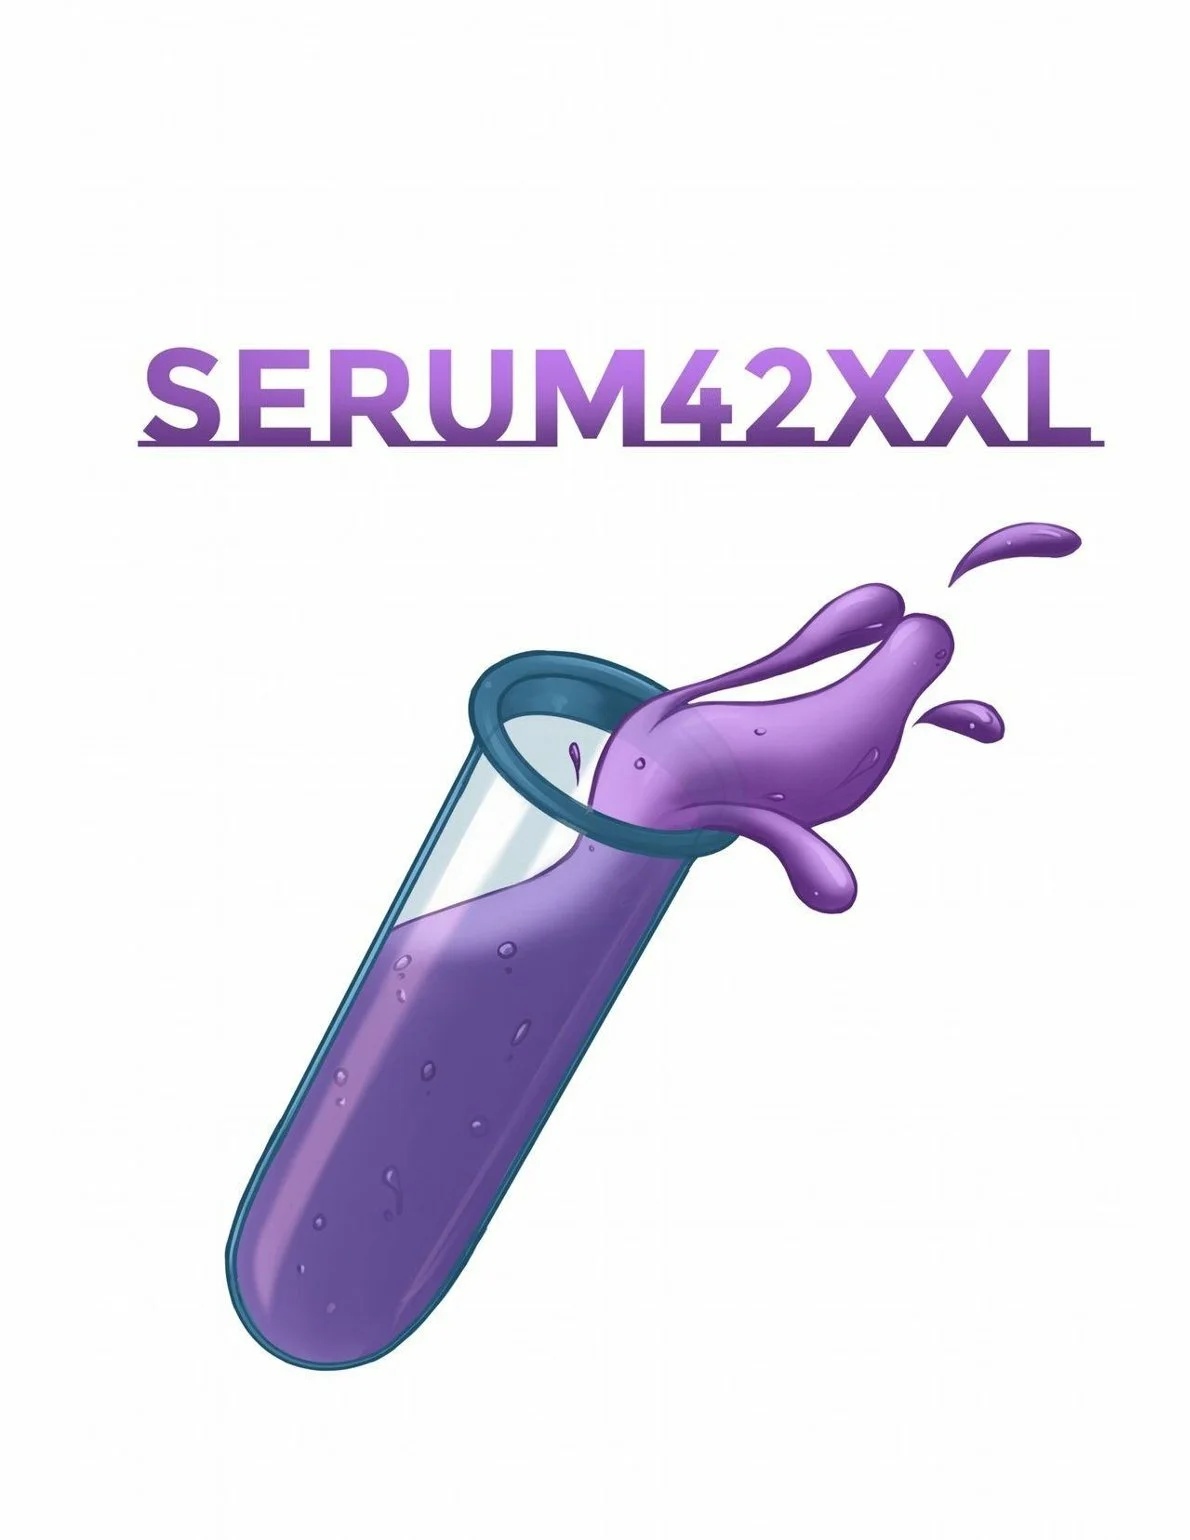 Serum42XXL (completo) - 20